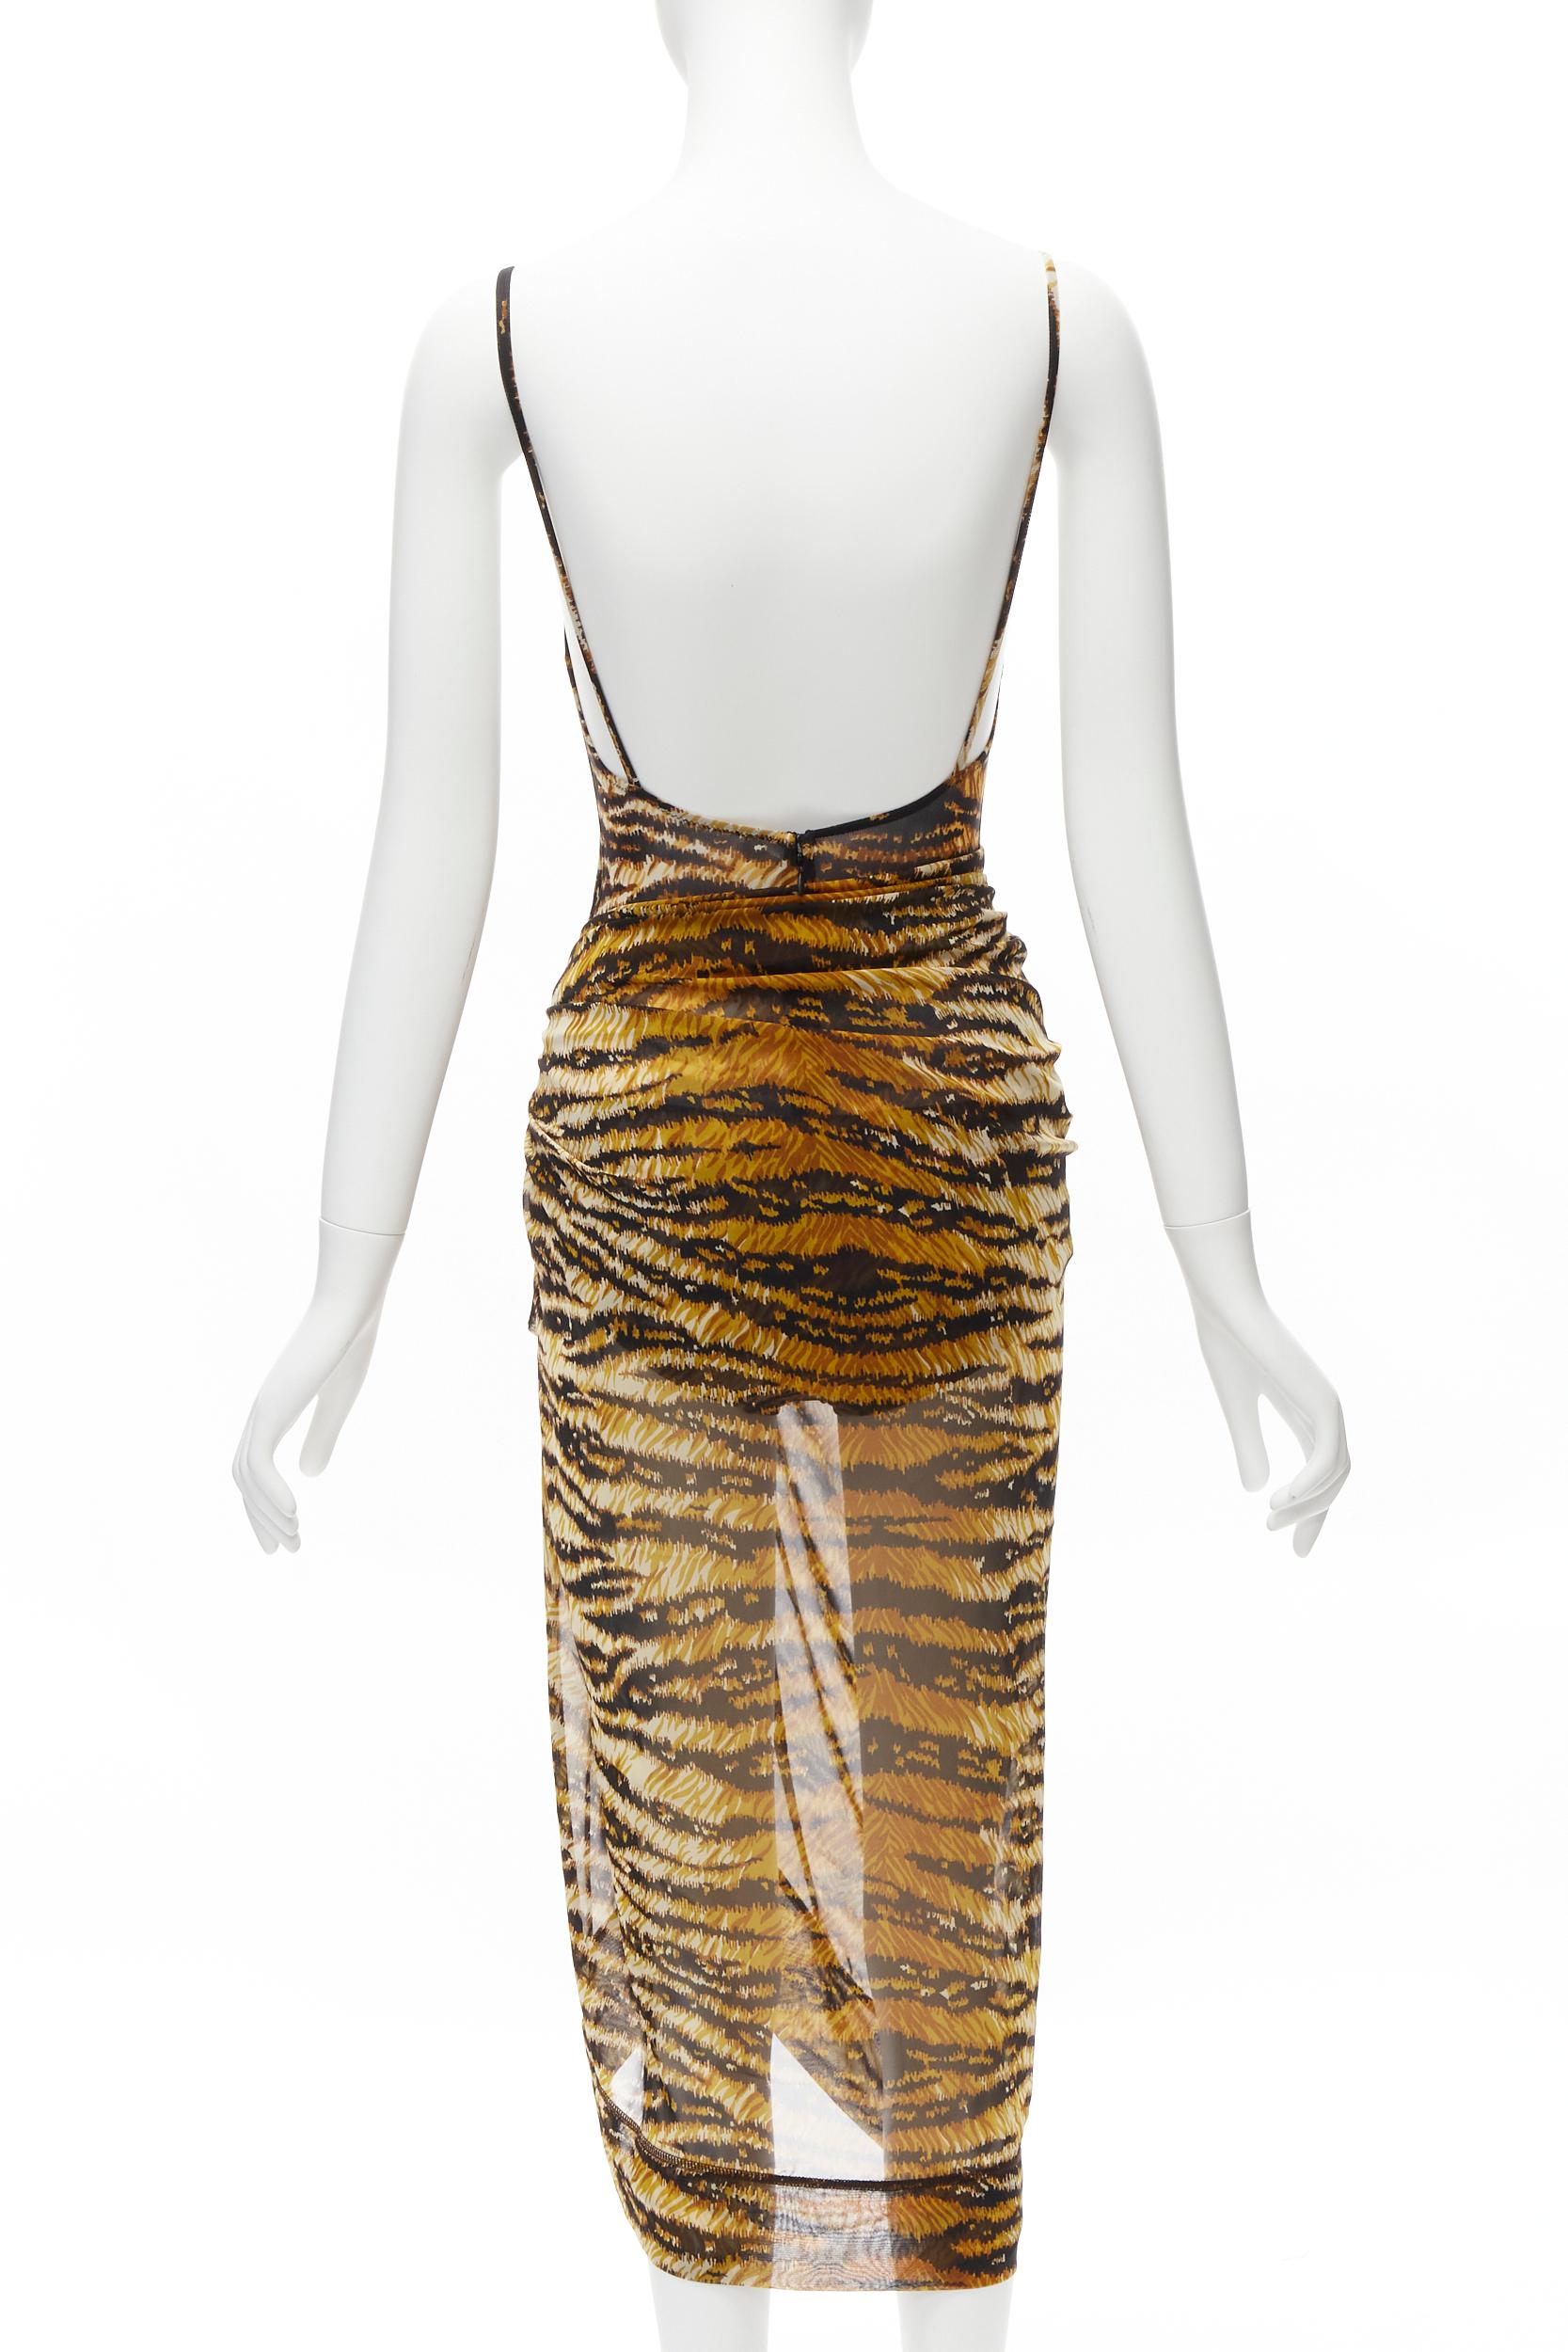 DOLCE GABBANA MARE Vintage tiger print mesh bustier bodysuit wrap skirt scarf S For Sale 7